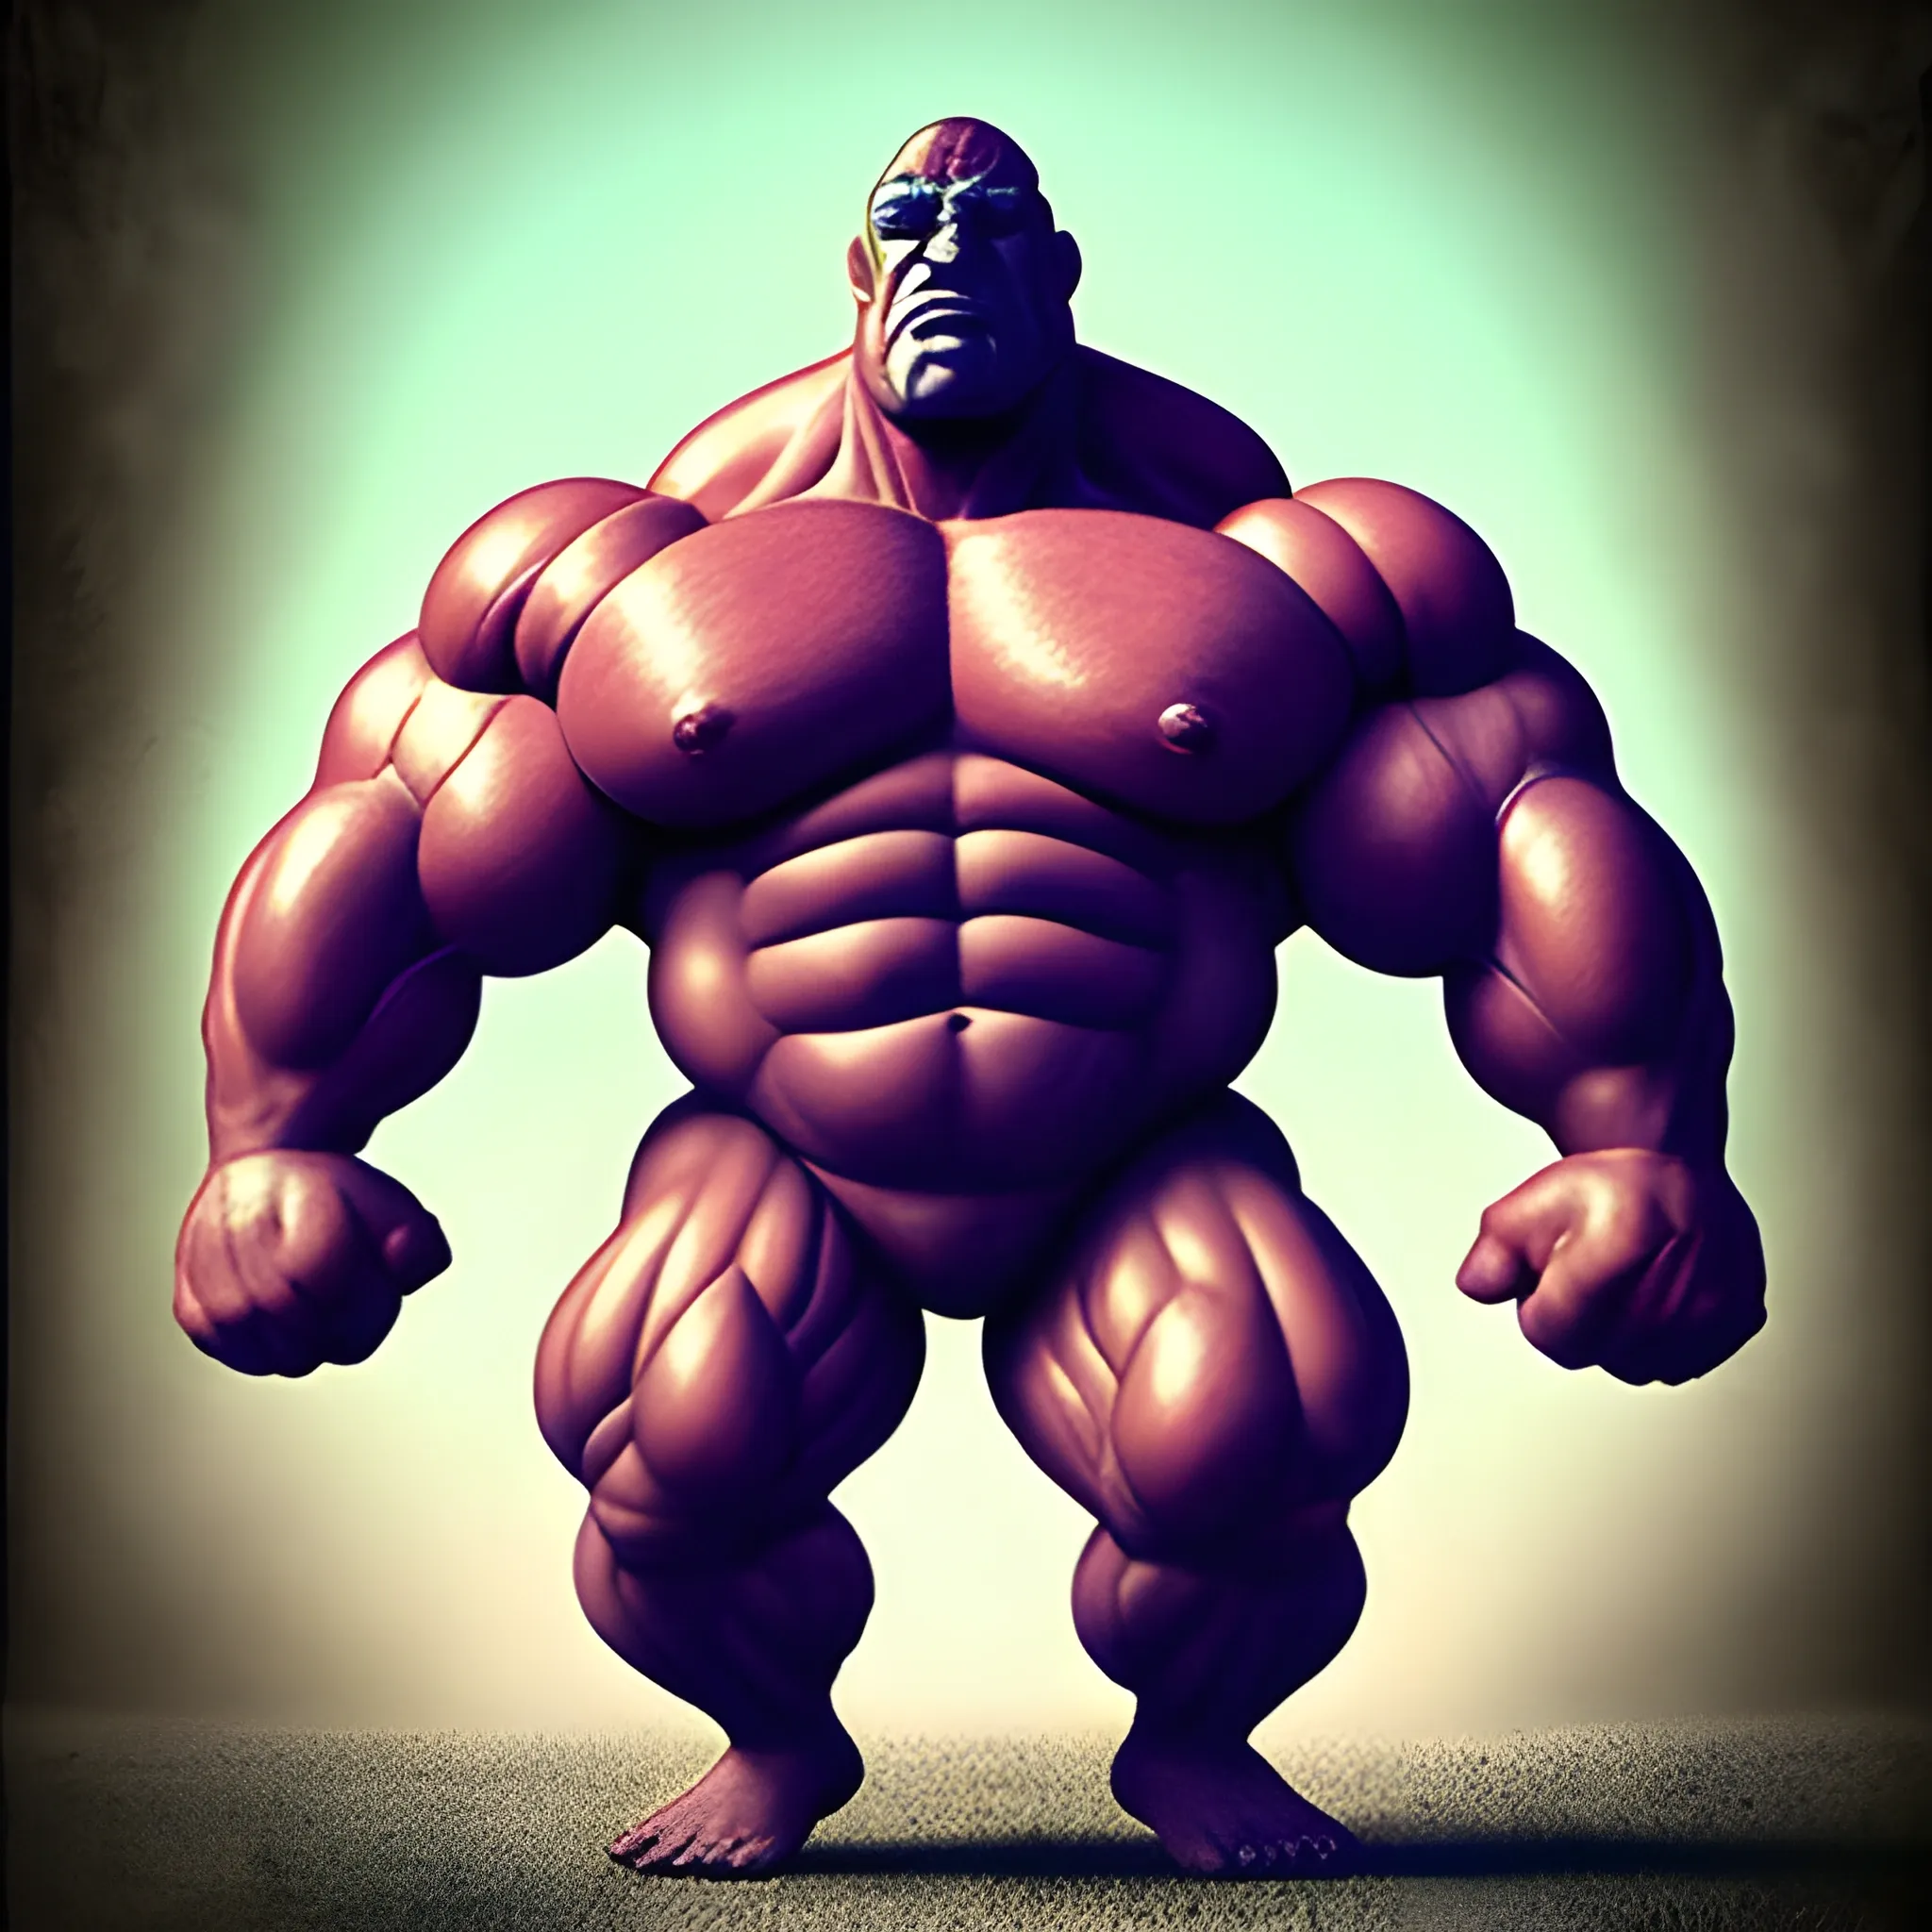 Giant man, monster muscle, muscle man morph, huge giant morph, Trippy